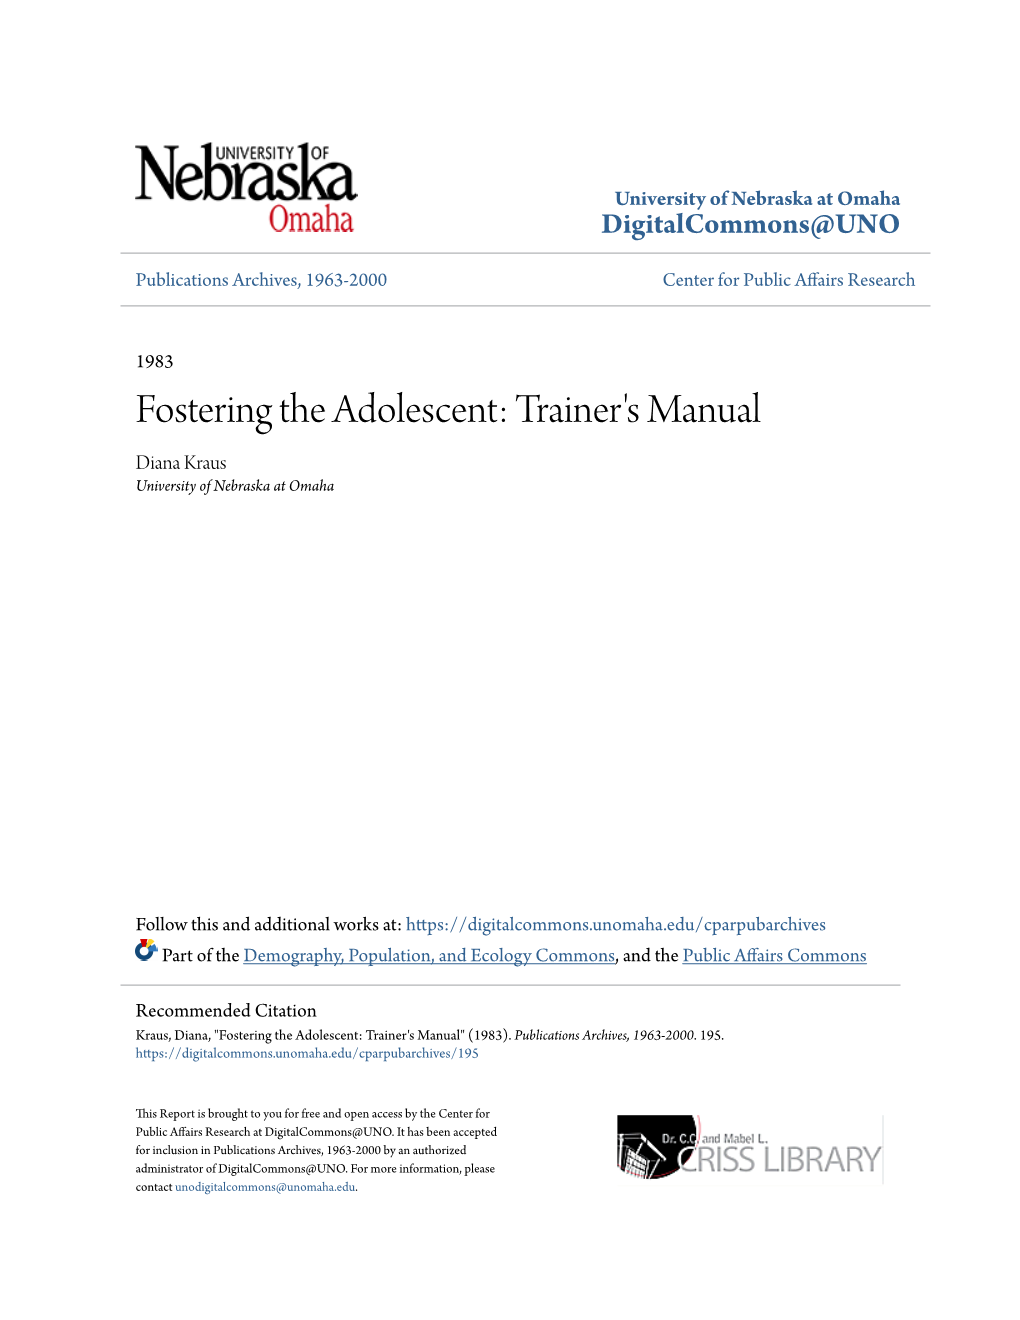 Fostering the Adolescent: Trainer's Manual Diana Kraus University of Nebraska at Omaha